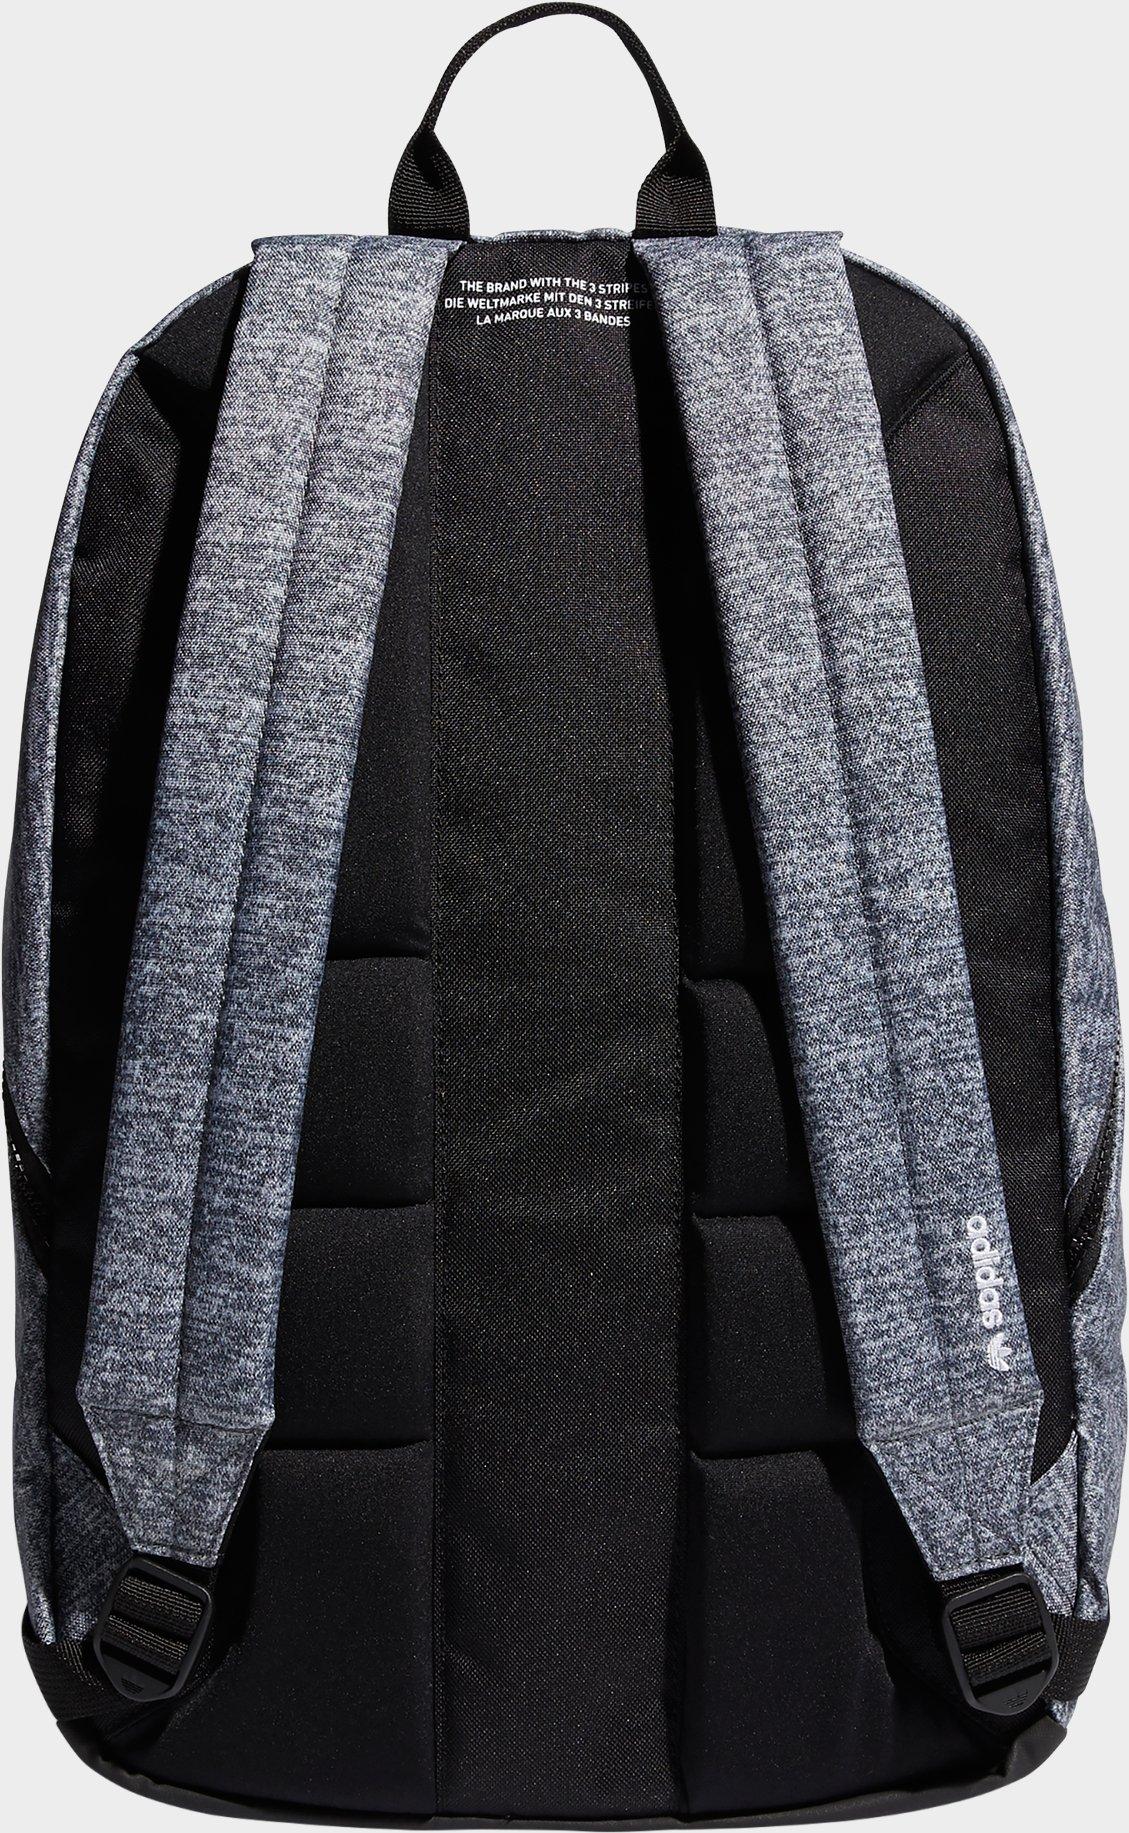 adidas national backpack grey